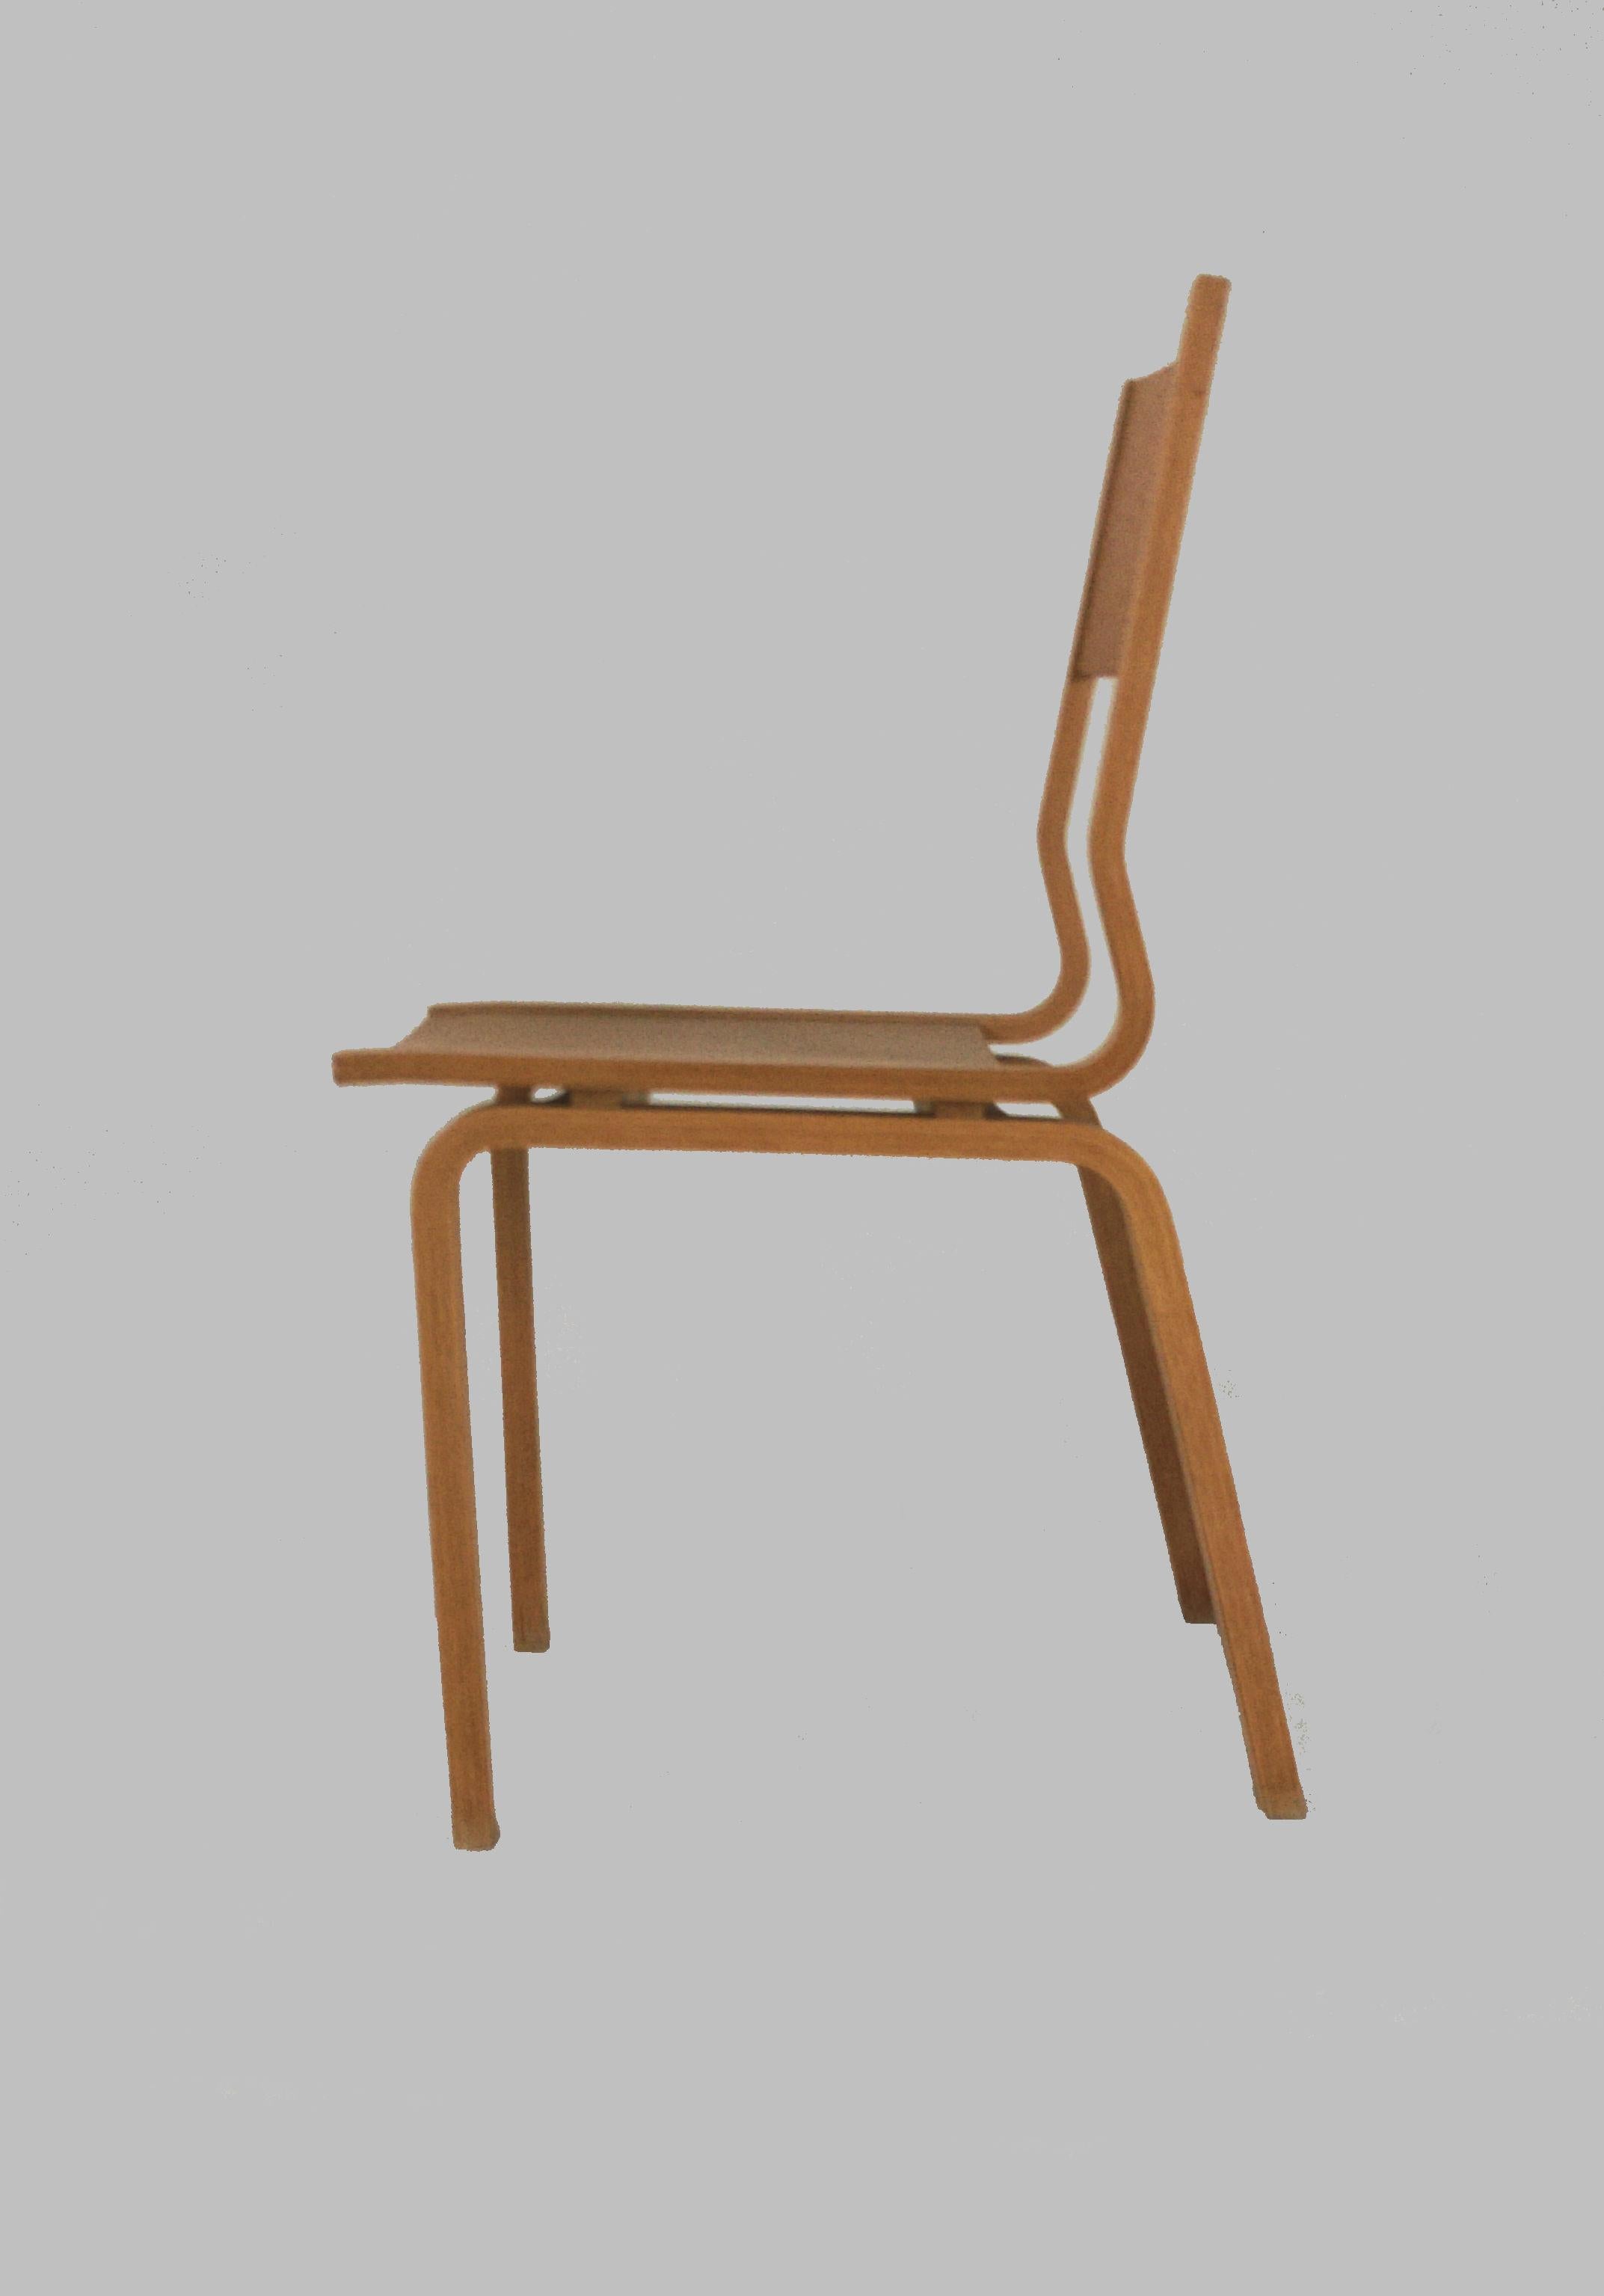 1965 Danish Arne Jacobsen Saint Catherines Desk and Chair in Oak by Fritz Hansen For Sale 4